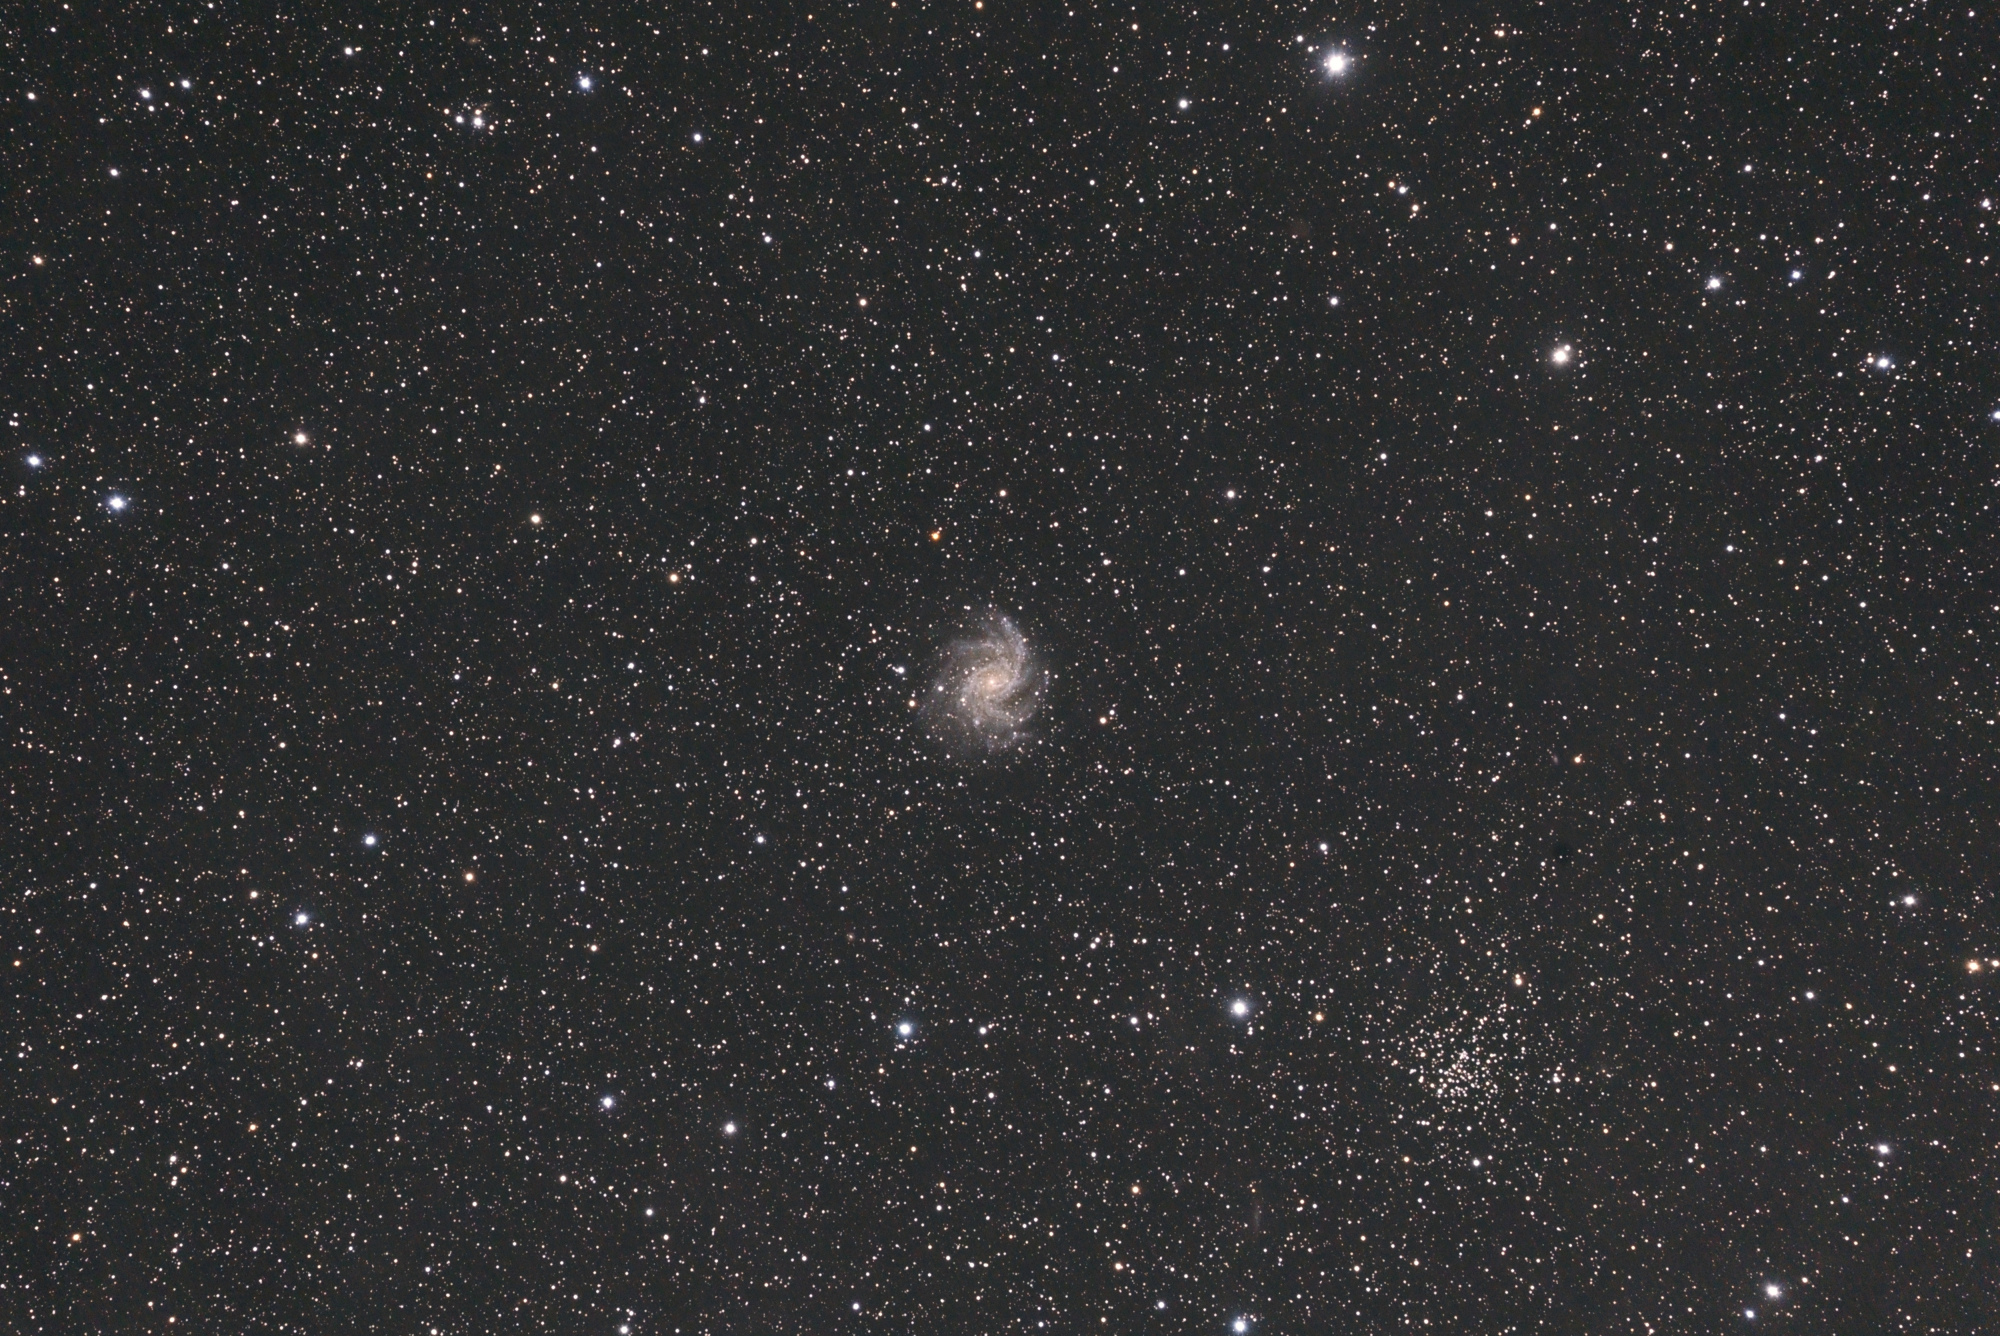 NGC_6946-dss1-iris-1-cs5-1-FINAL-3.jpg